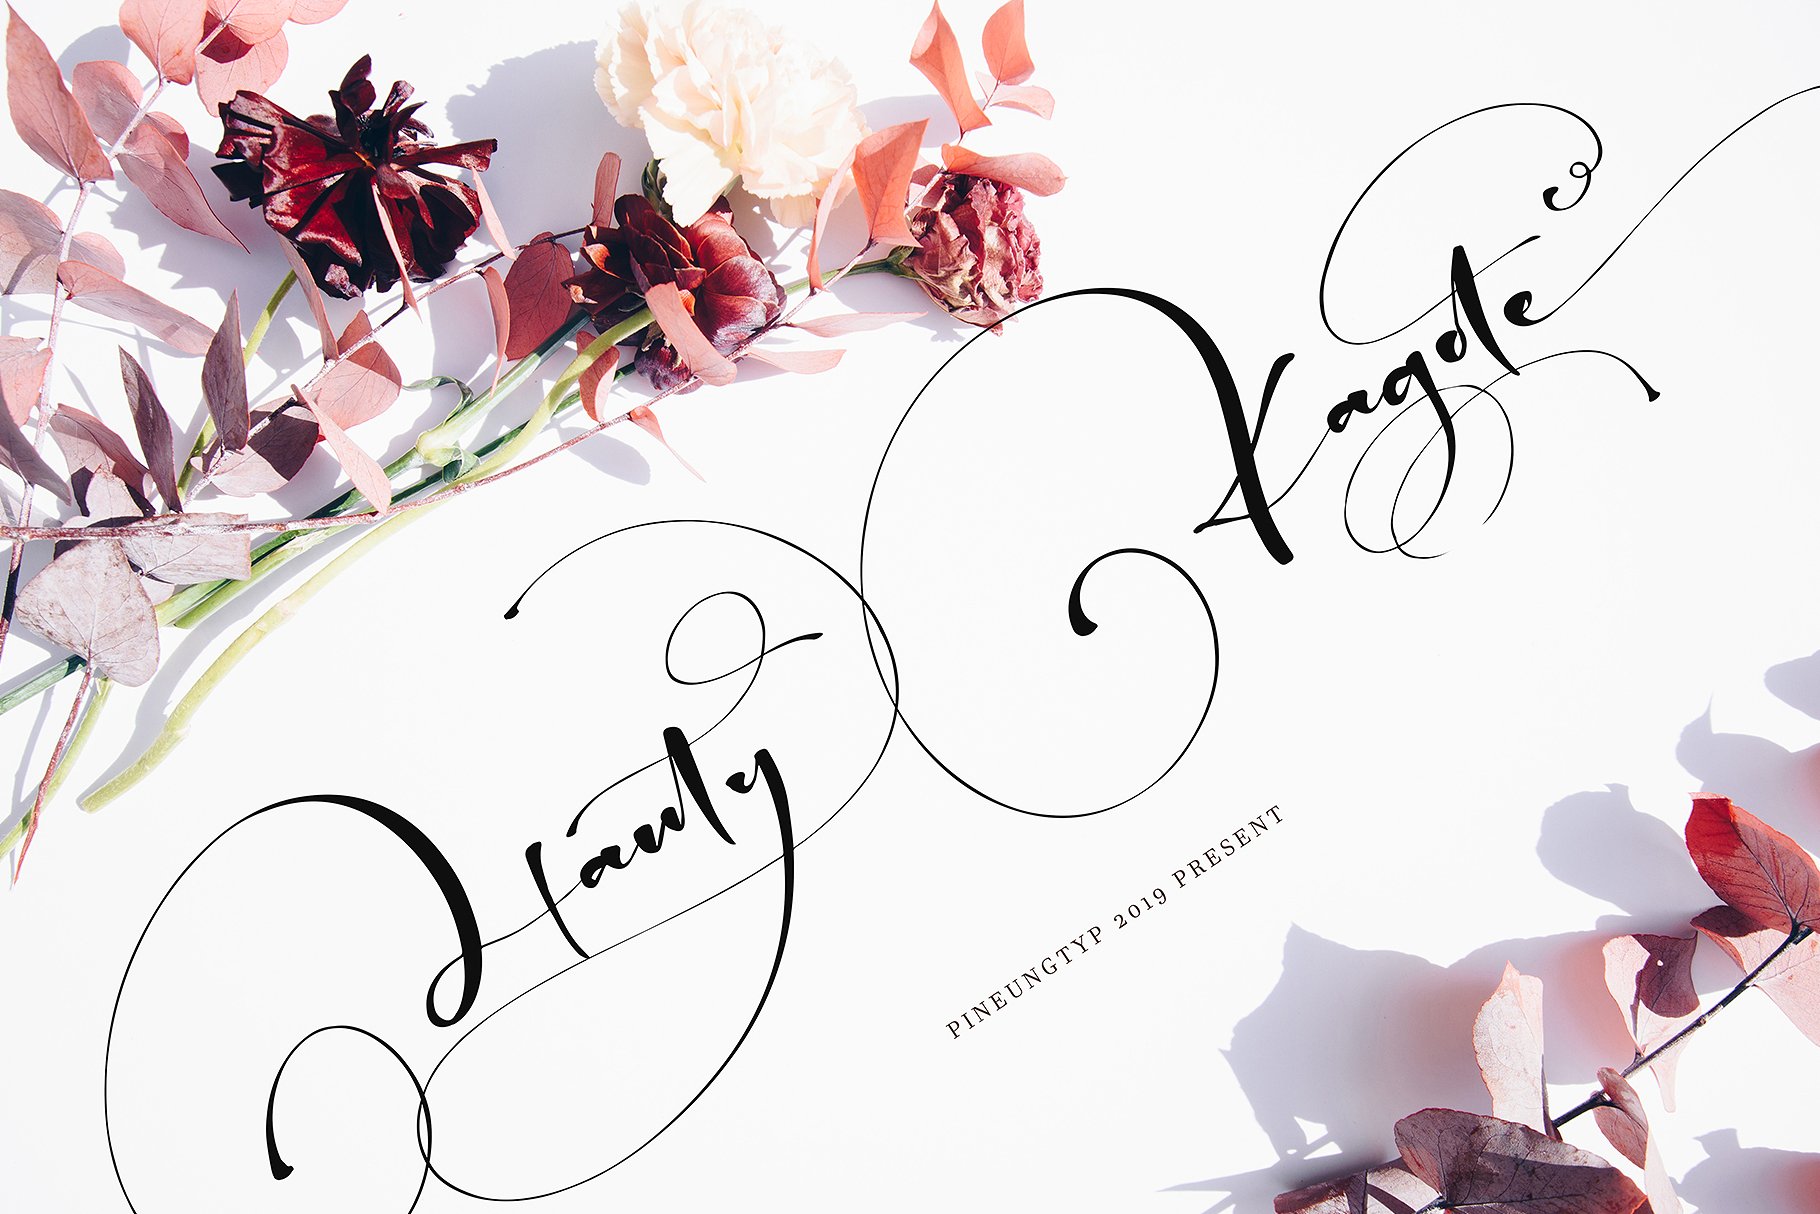 Hanty Kagote飘逸现代手写书法婚礼字体 Hanty Kagote Elegant Modern Handwritten Calligraphy Wedding Font插图7